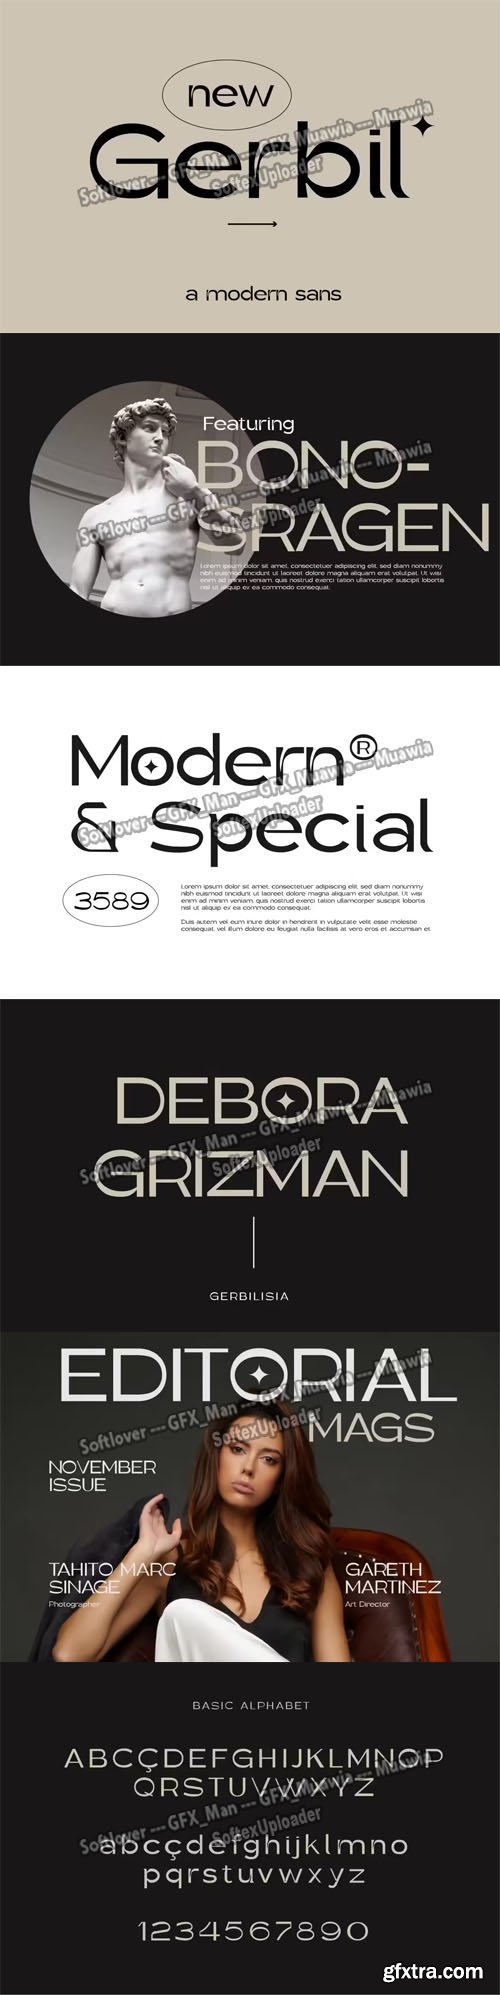 Gerbil - Modern Geometric Sans Serif Font